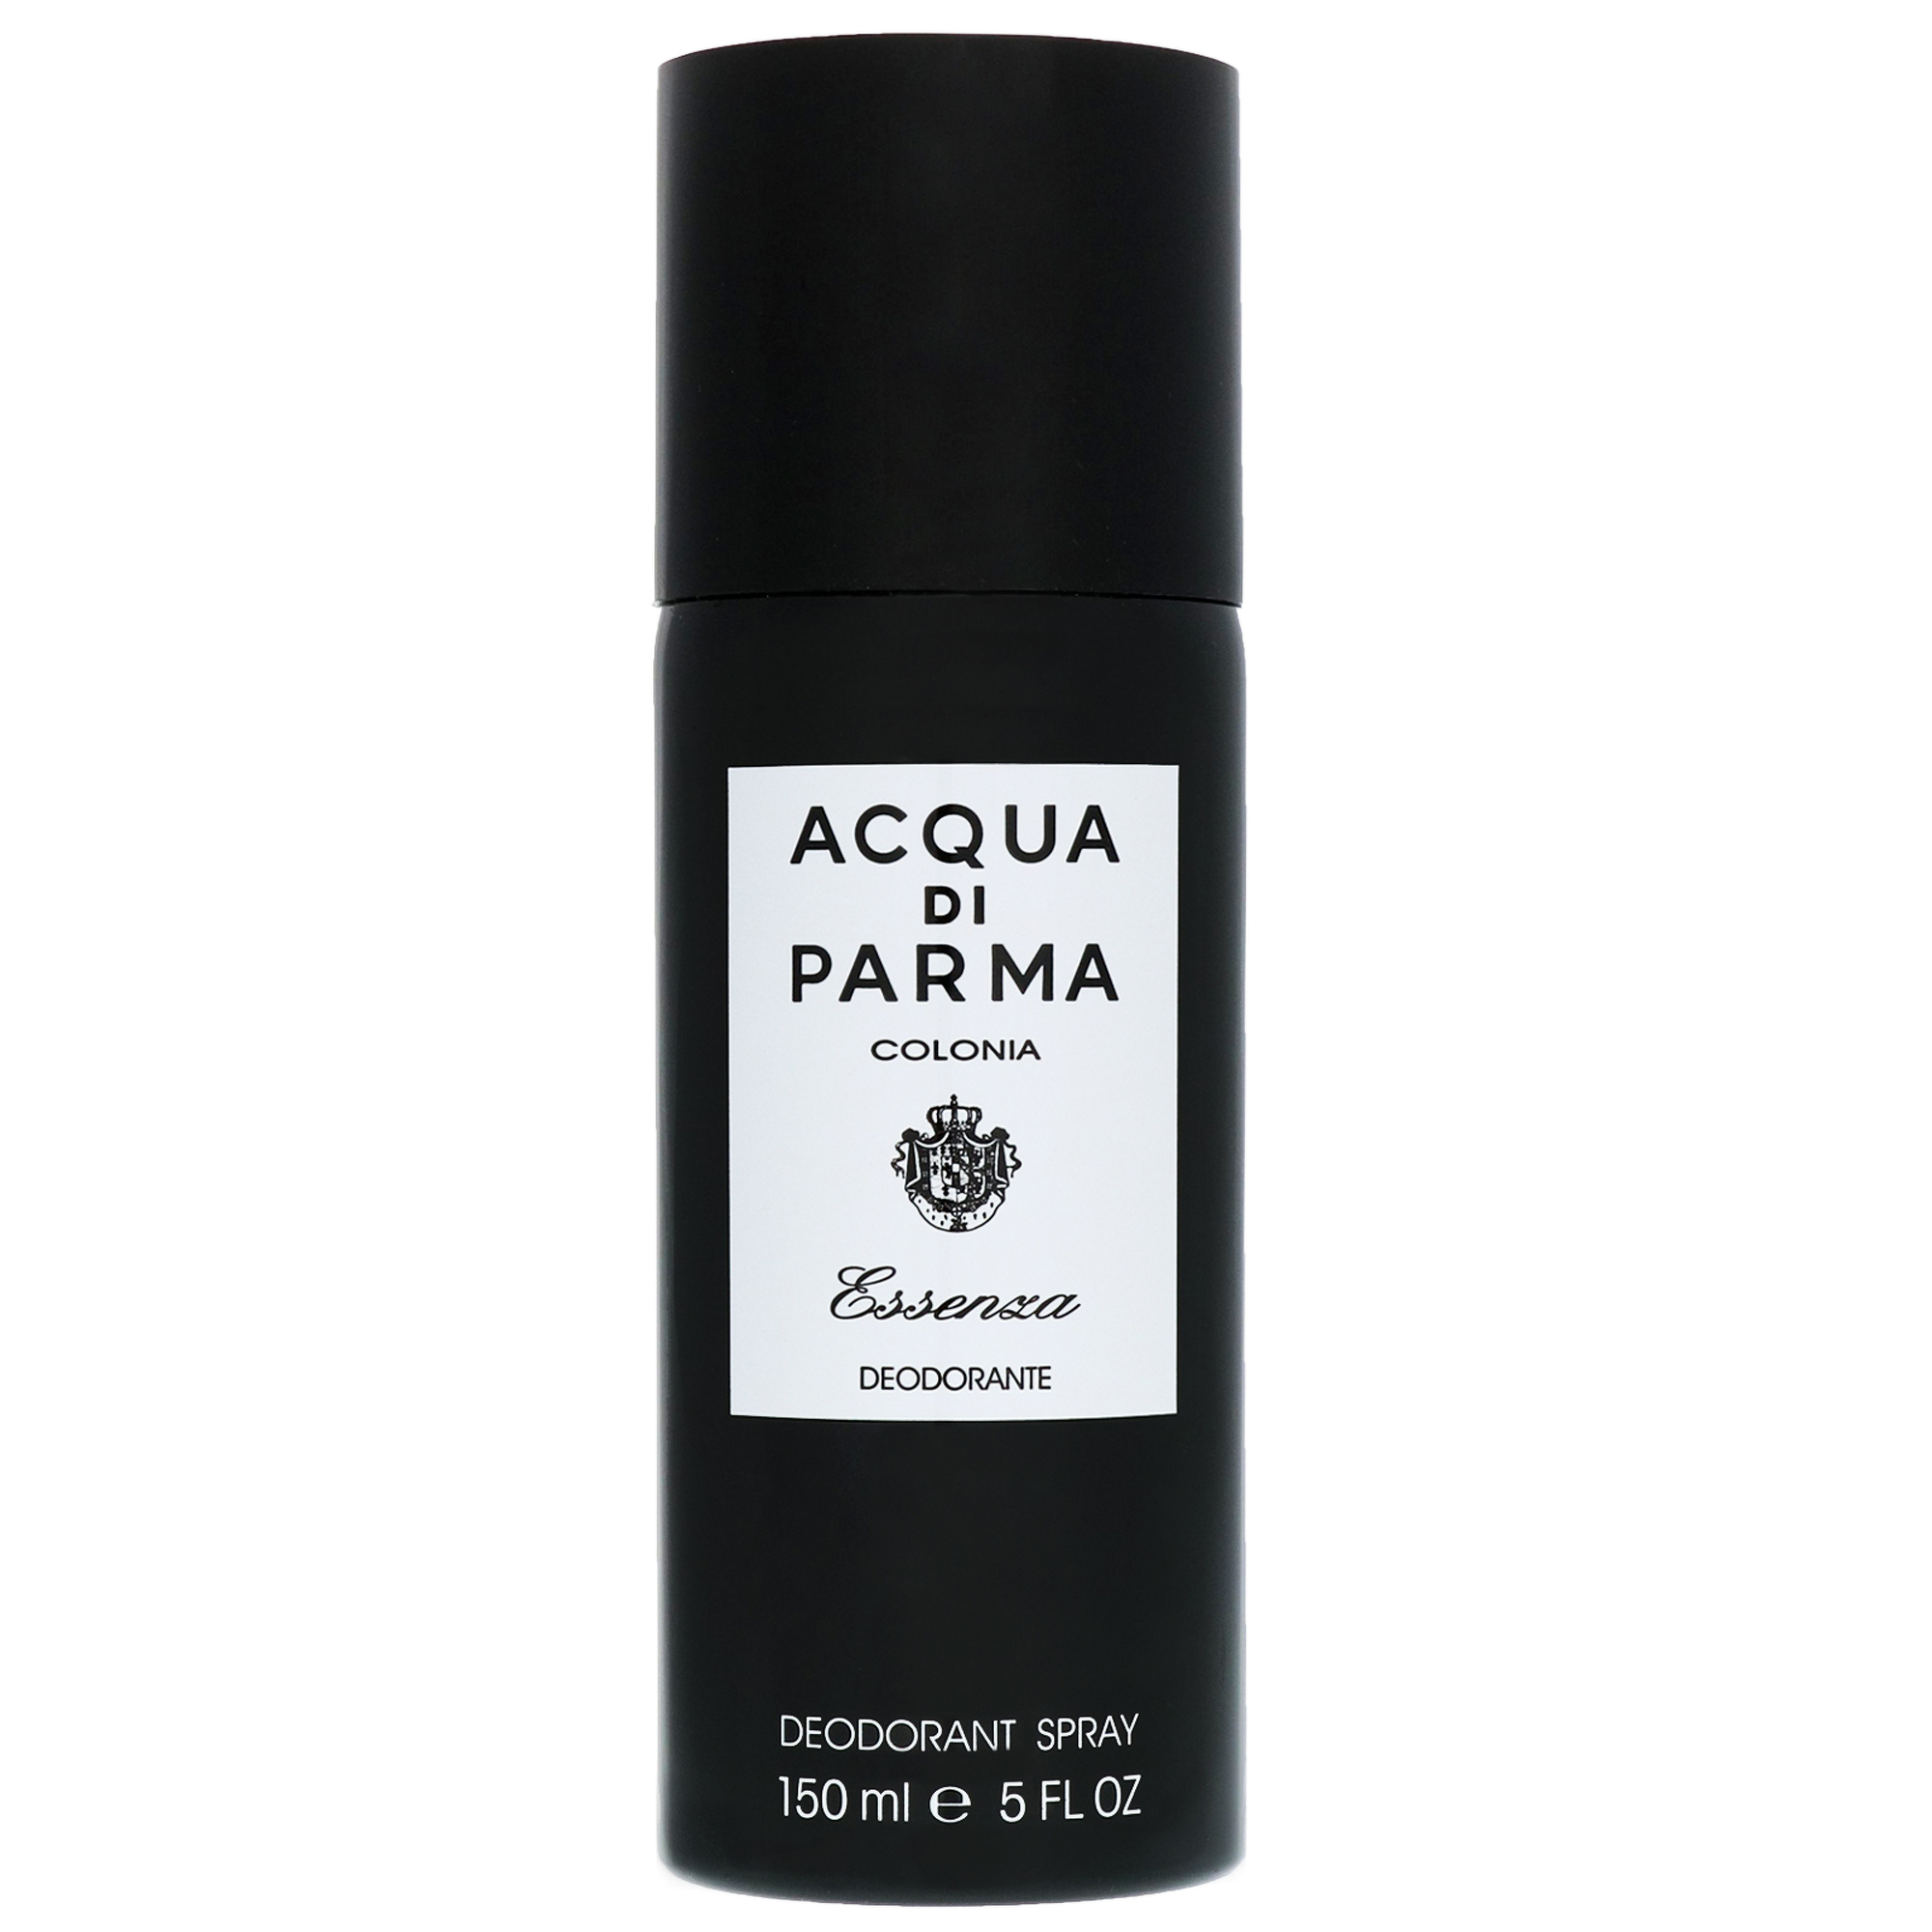 Photos - Women's Fragrance Acqua di Parma Colonia Essenza Deodorant Spray 150ml 